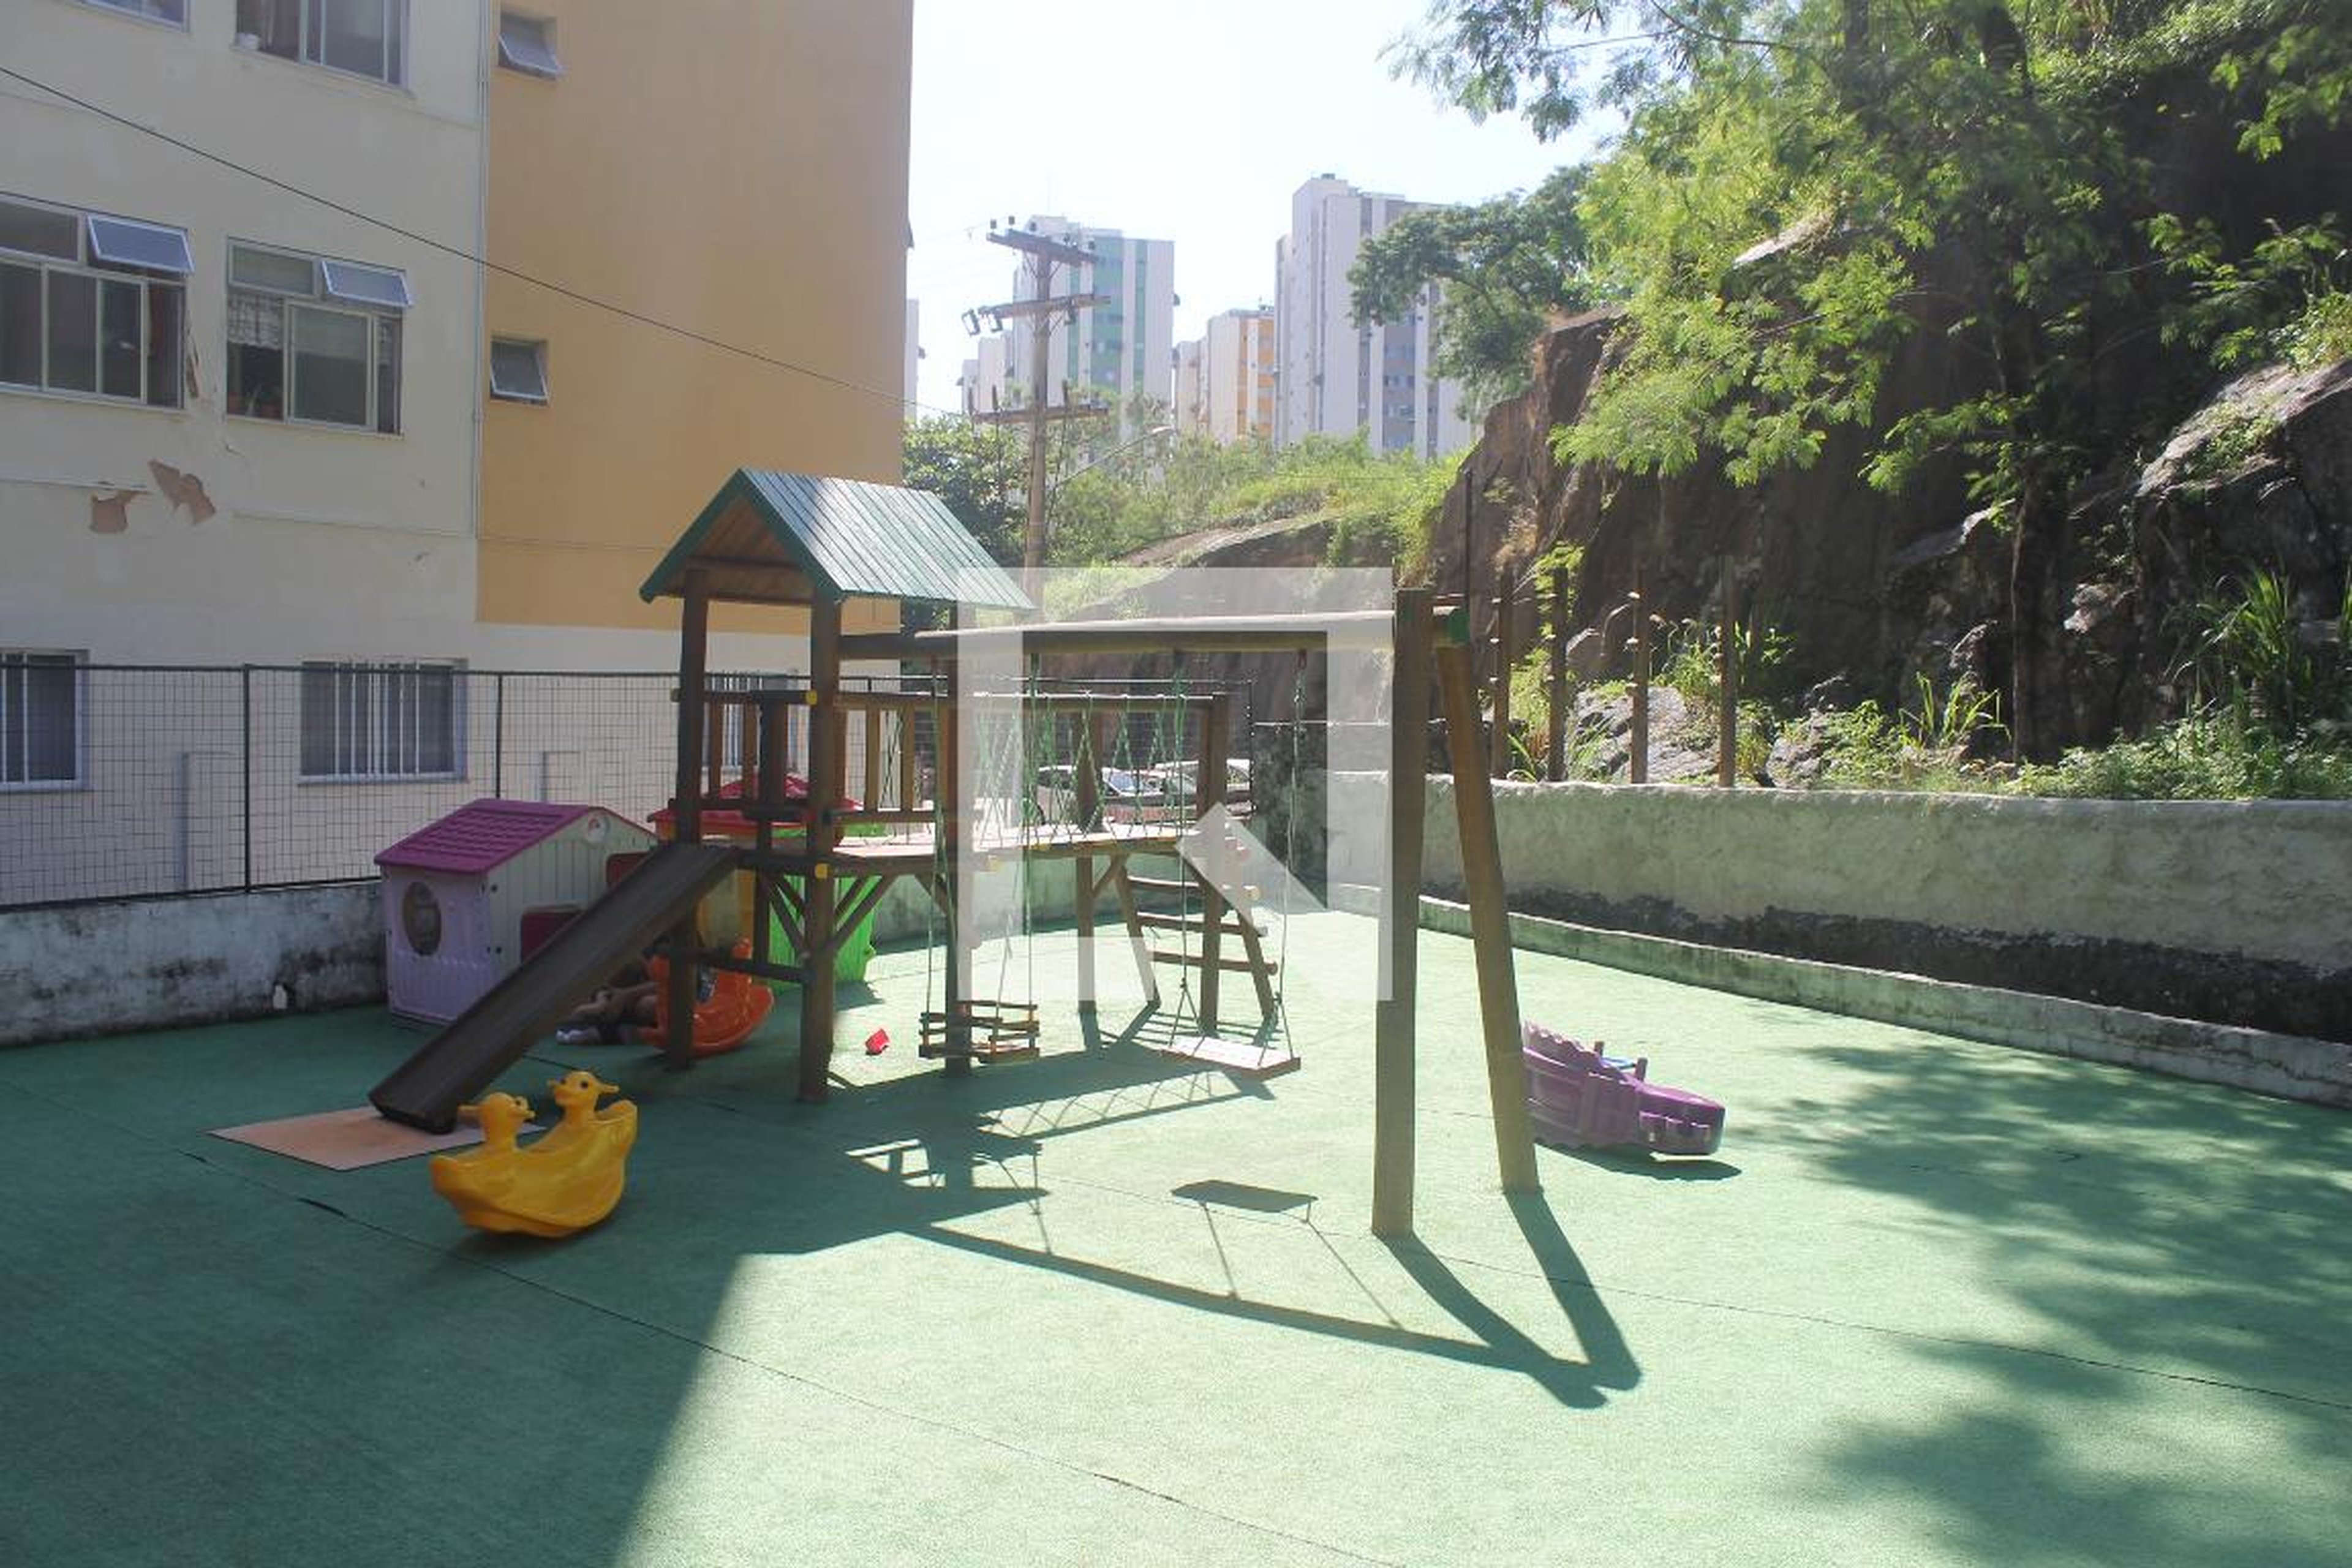 Playground - Almirante Cox